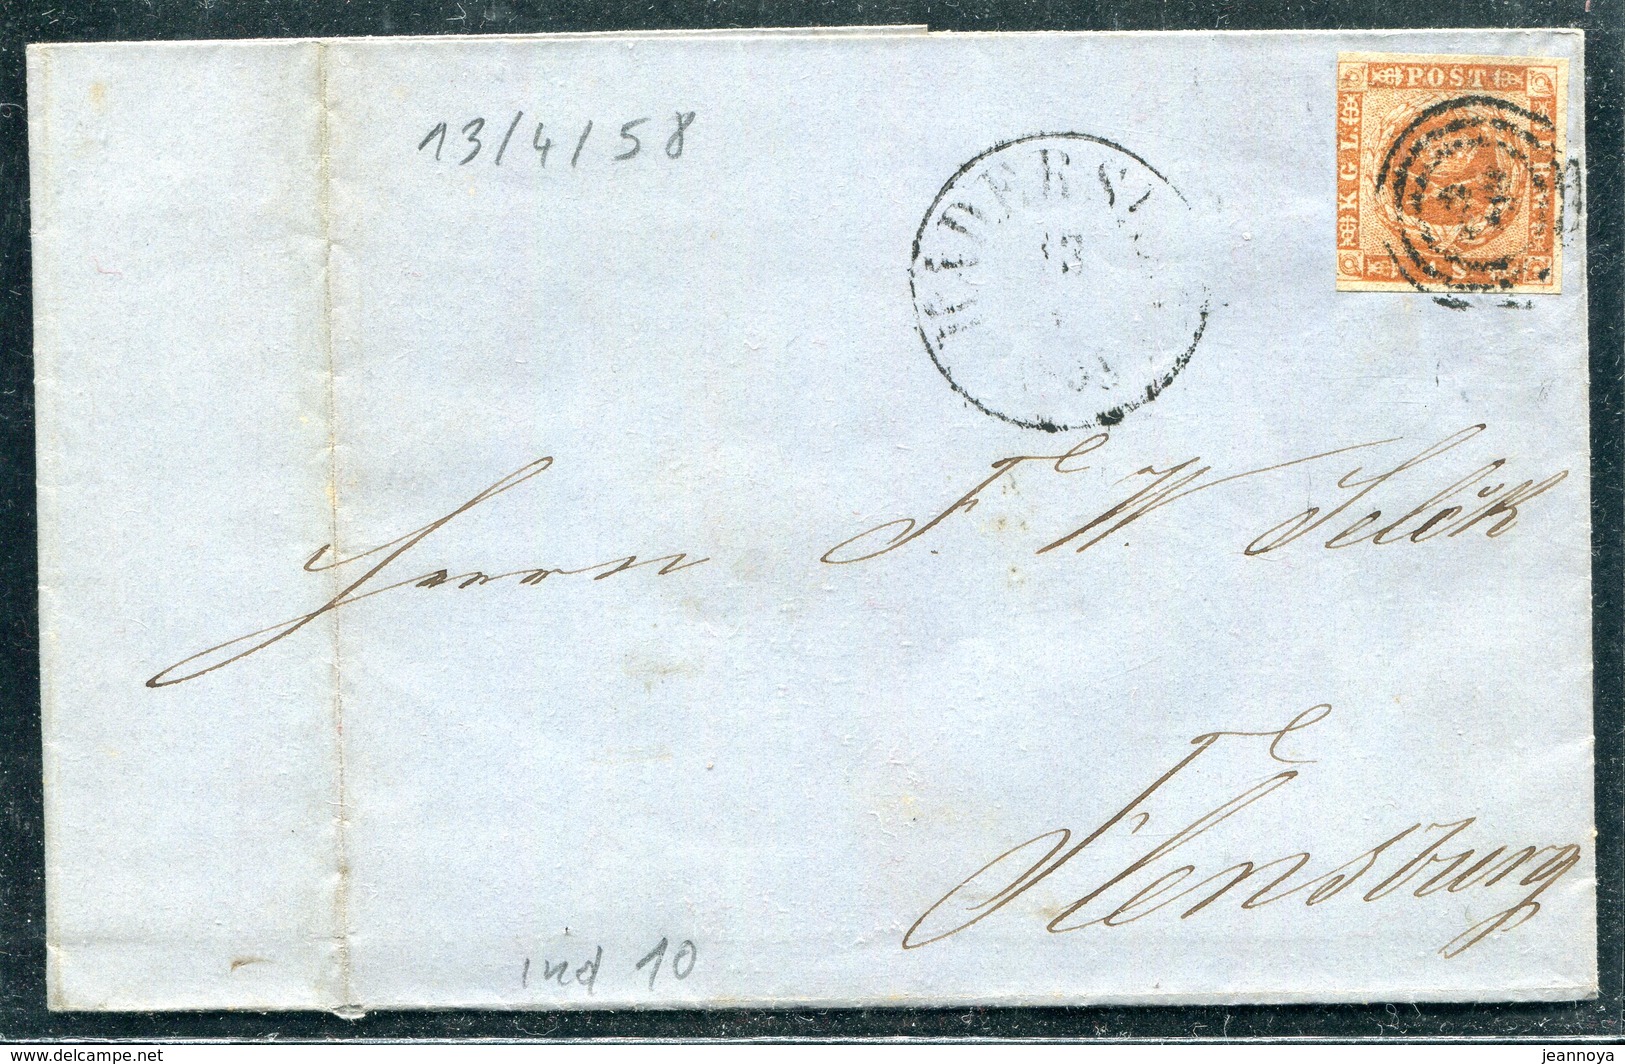 DANEMARK - N° 8 / LSC DE HADERSLEV LE 13/4/1858 - TB - Storia Postale